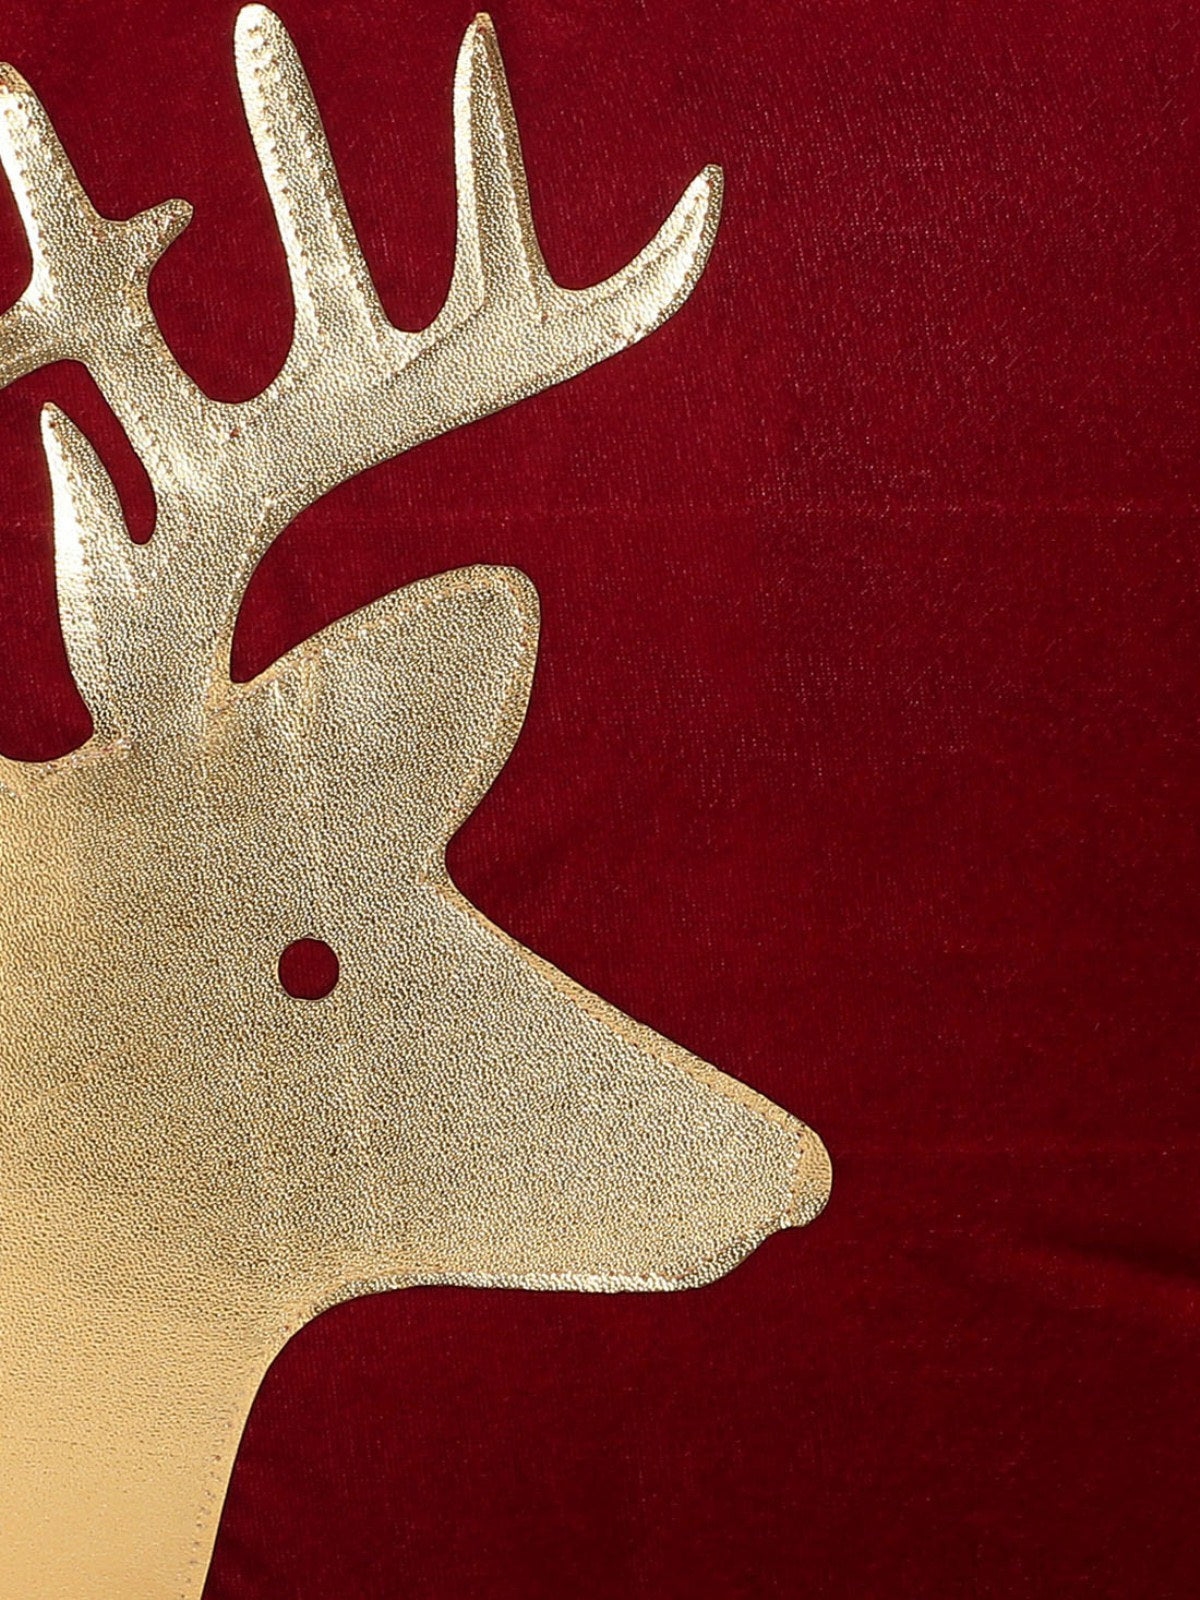 Deer Design 5 Piece Velvet Cushion Cover Set - 16" x 16", Red